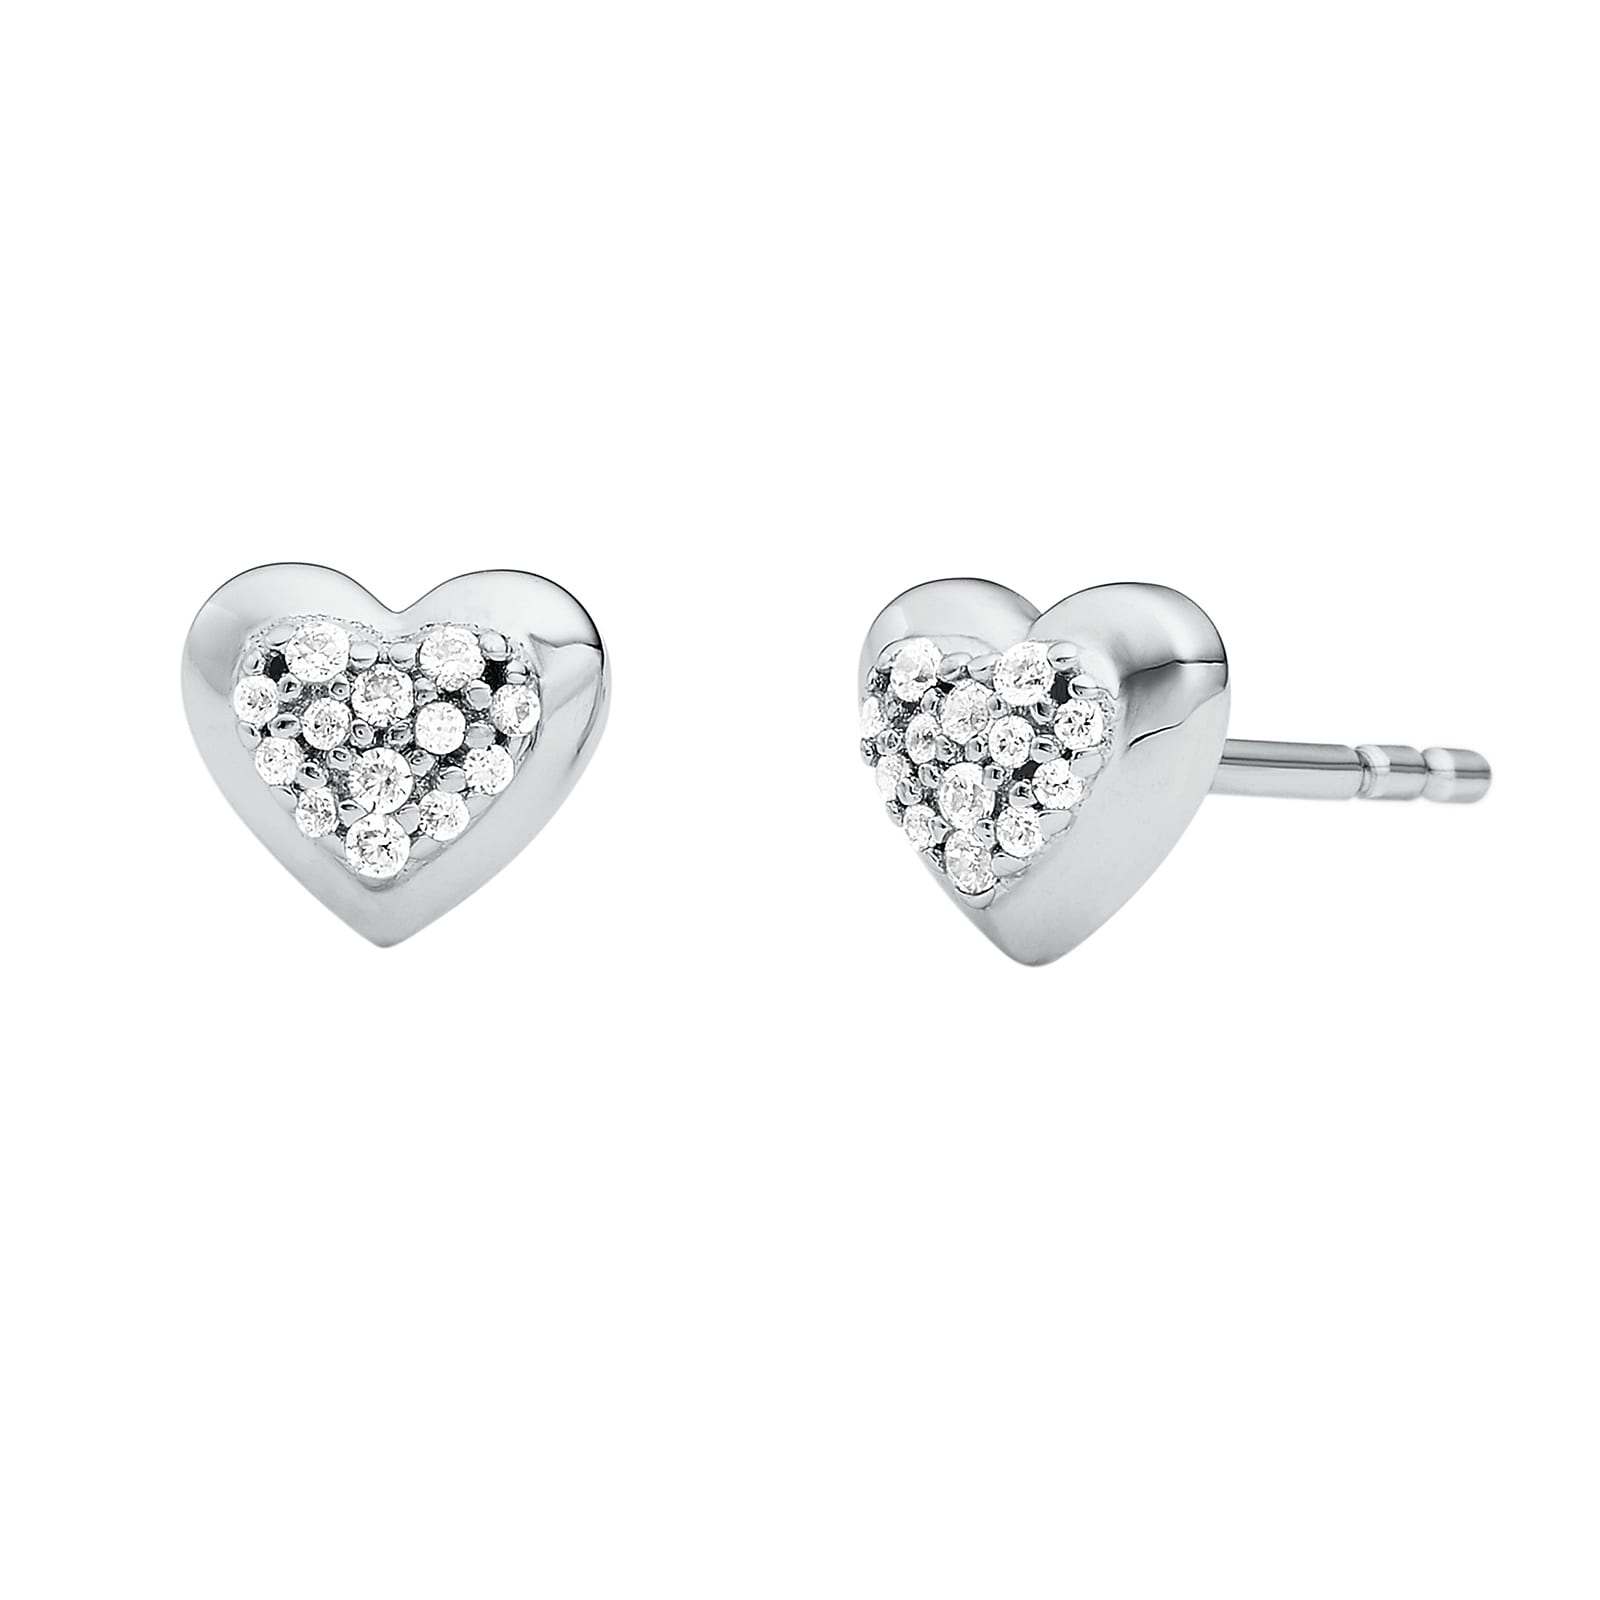 Chi tiết 69+ về michael kors heart earrings hay nhất